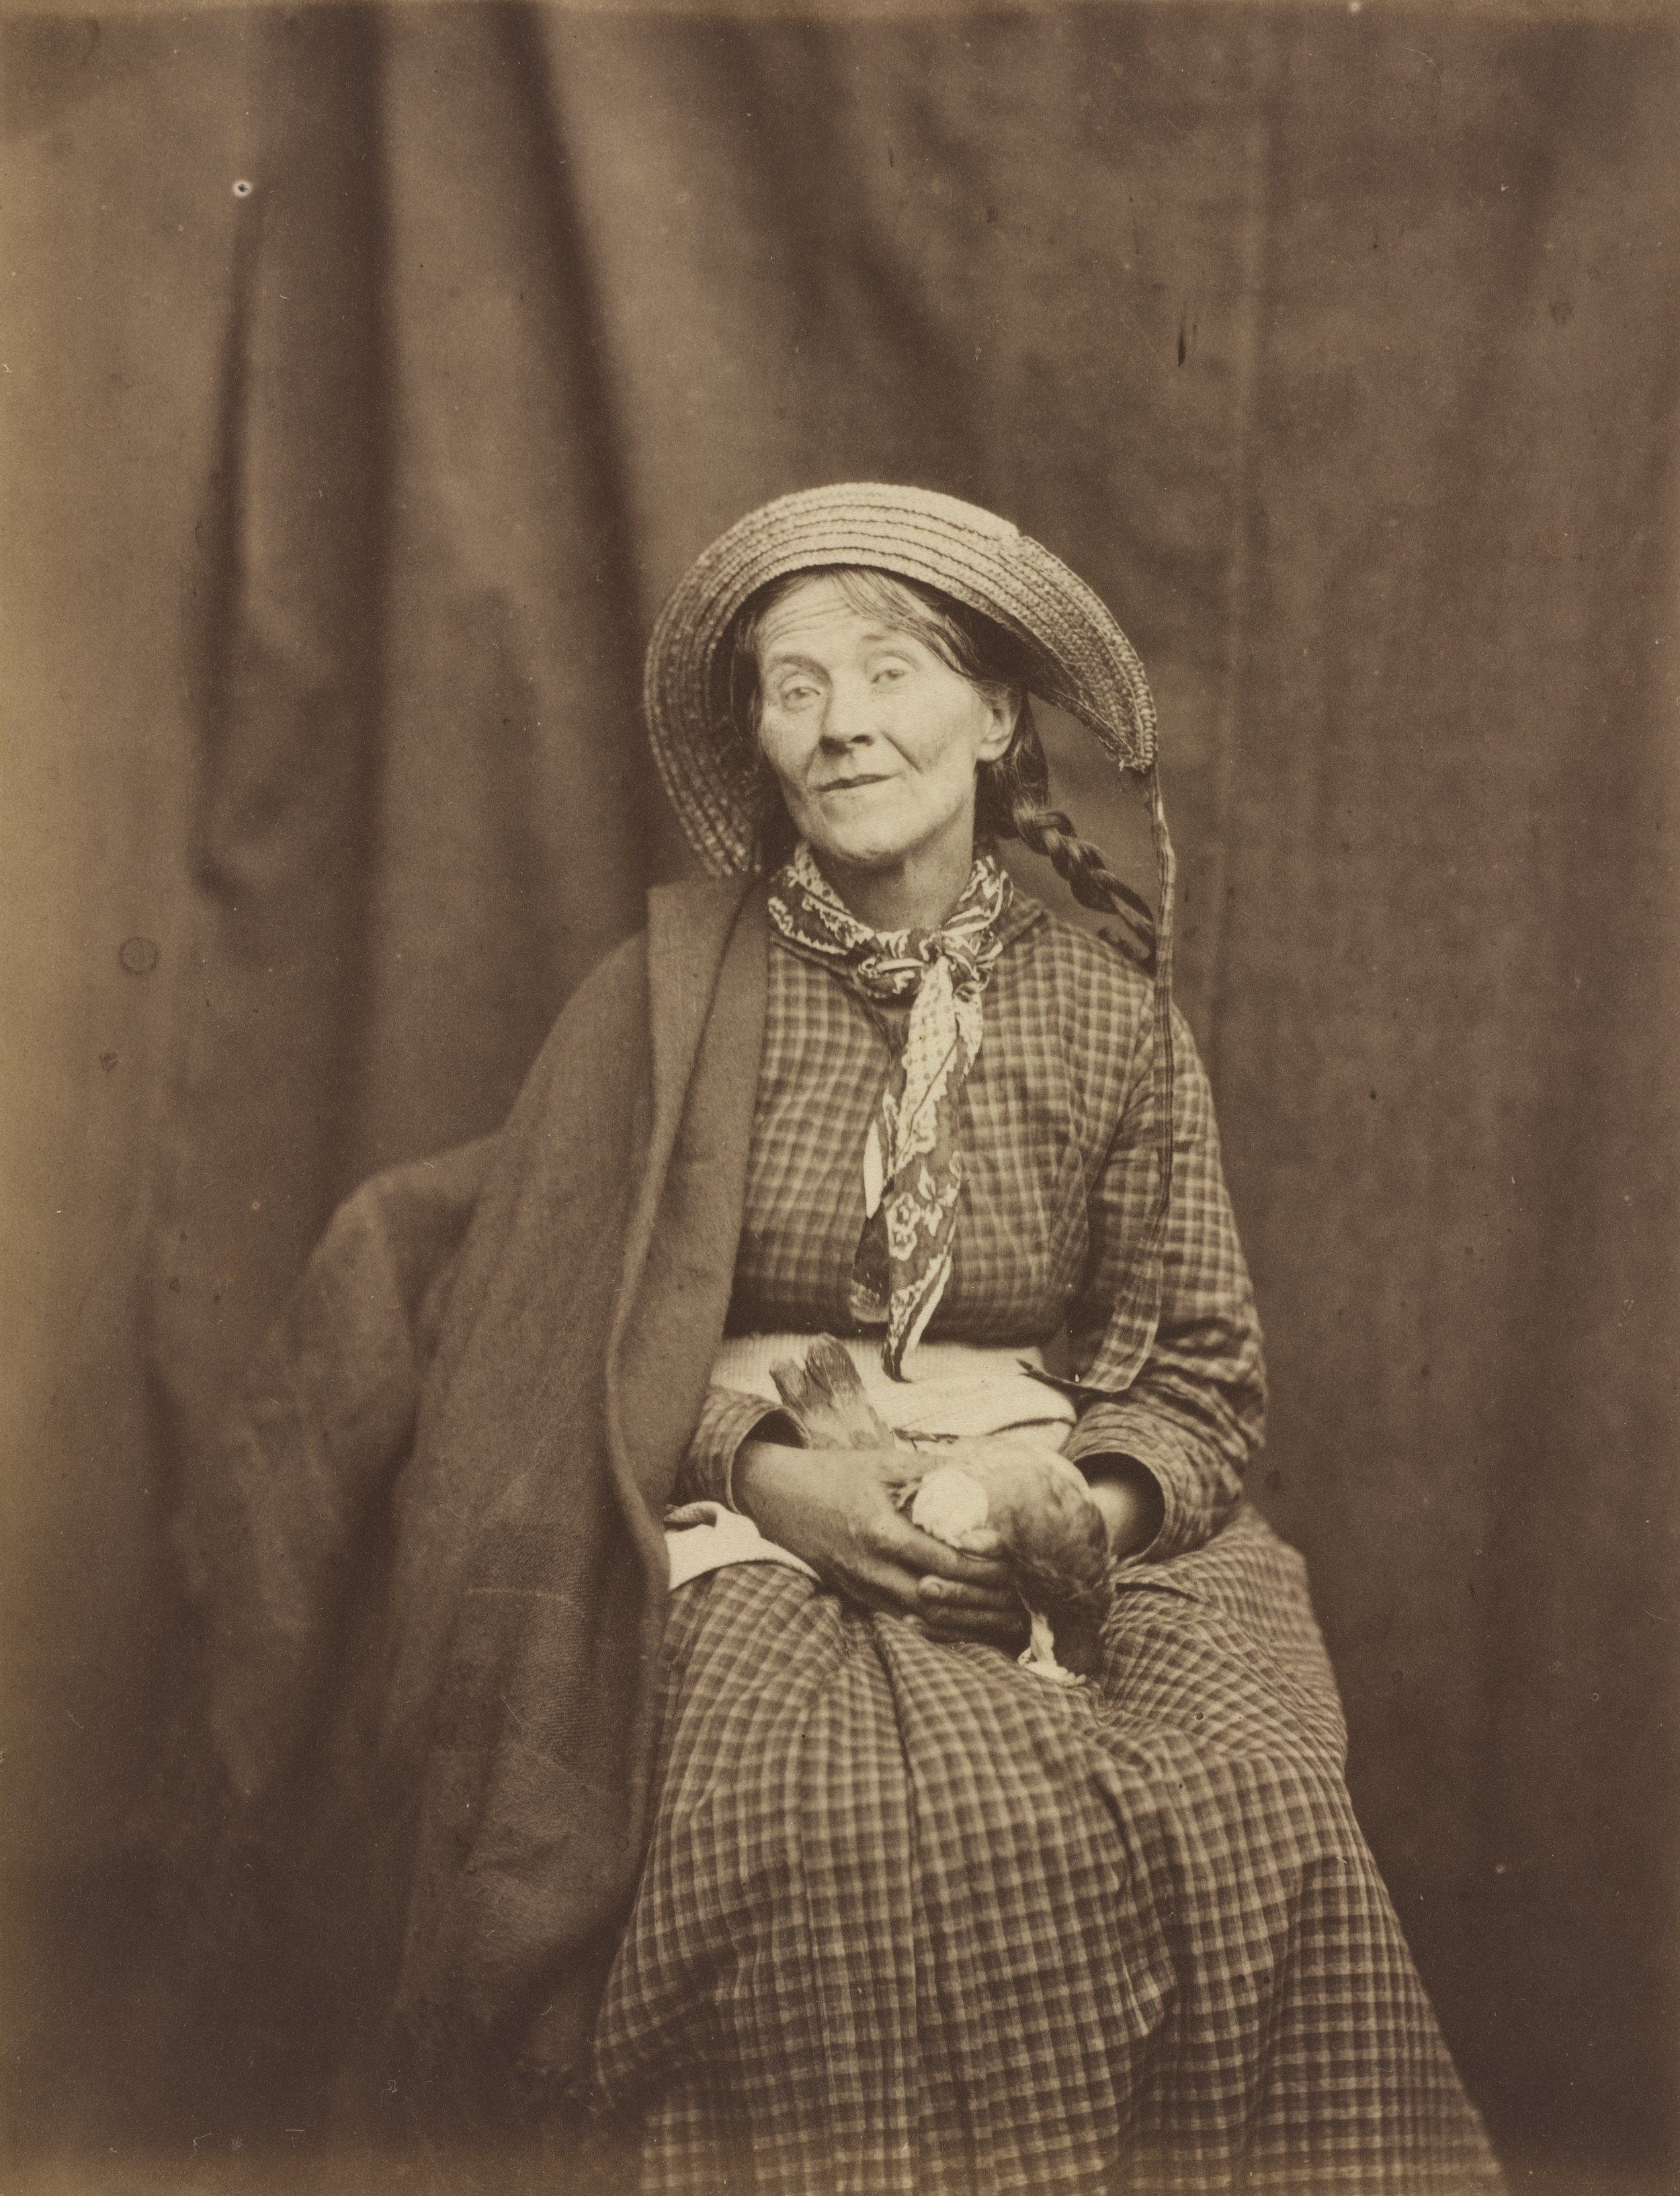 Dr._Hugh_Welch_Diamond,_Woman_Holding_a_Dead_Bird,_Surrey_County_Asylum,_c._1855,_NGA_92306.jpg